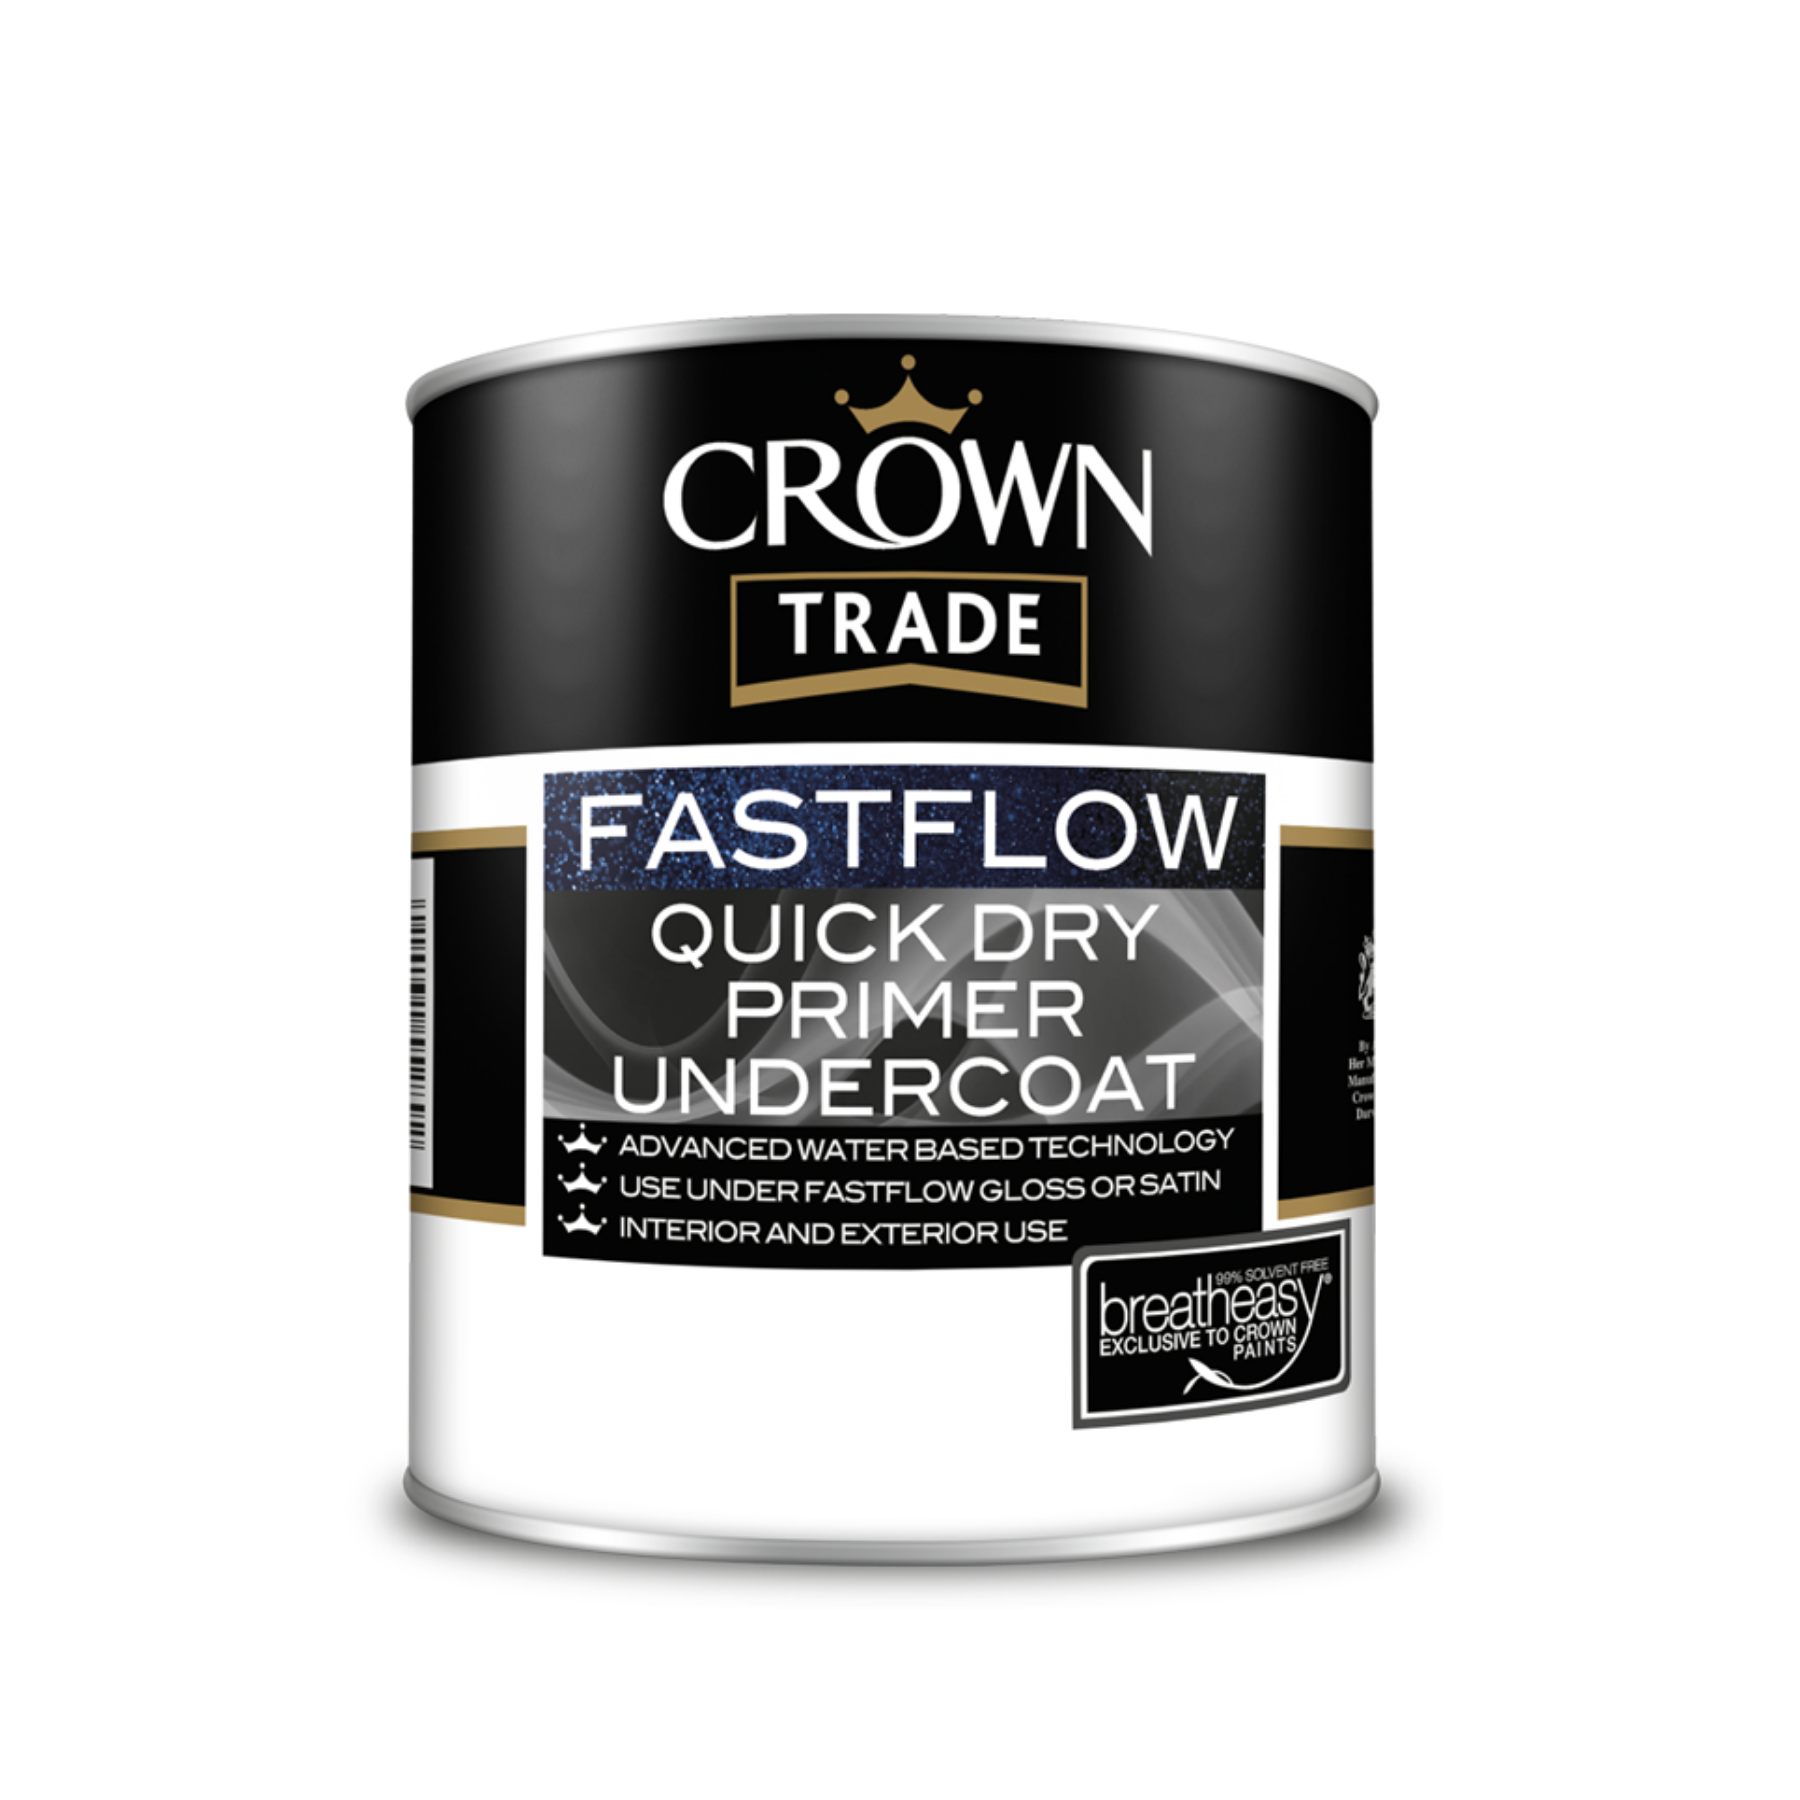 Fastflow Quick Dry Primer Undercoat